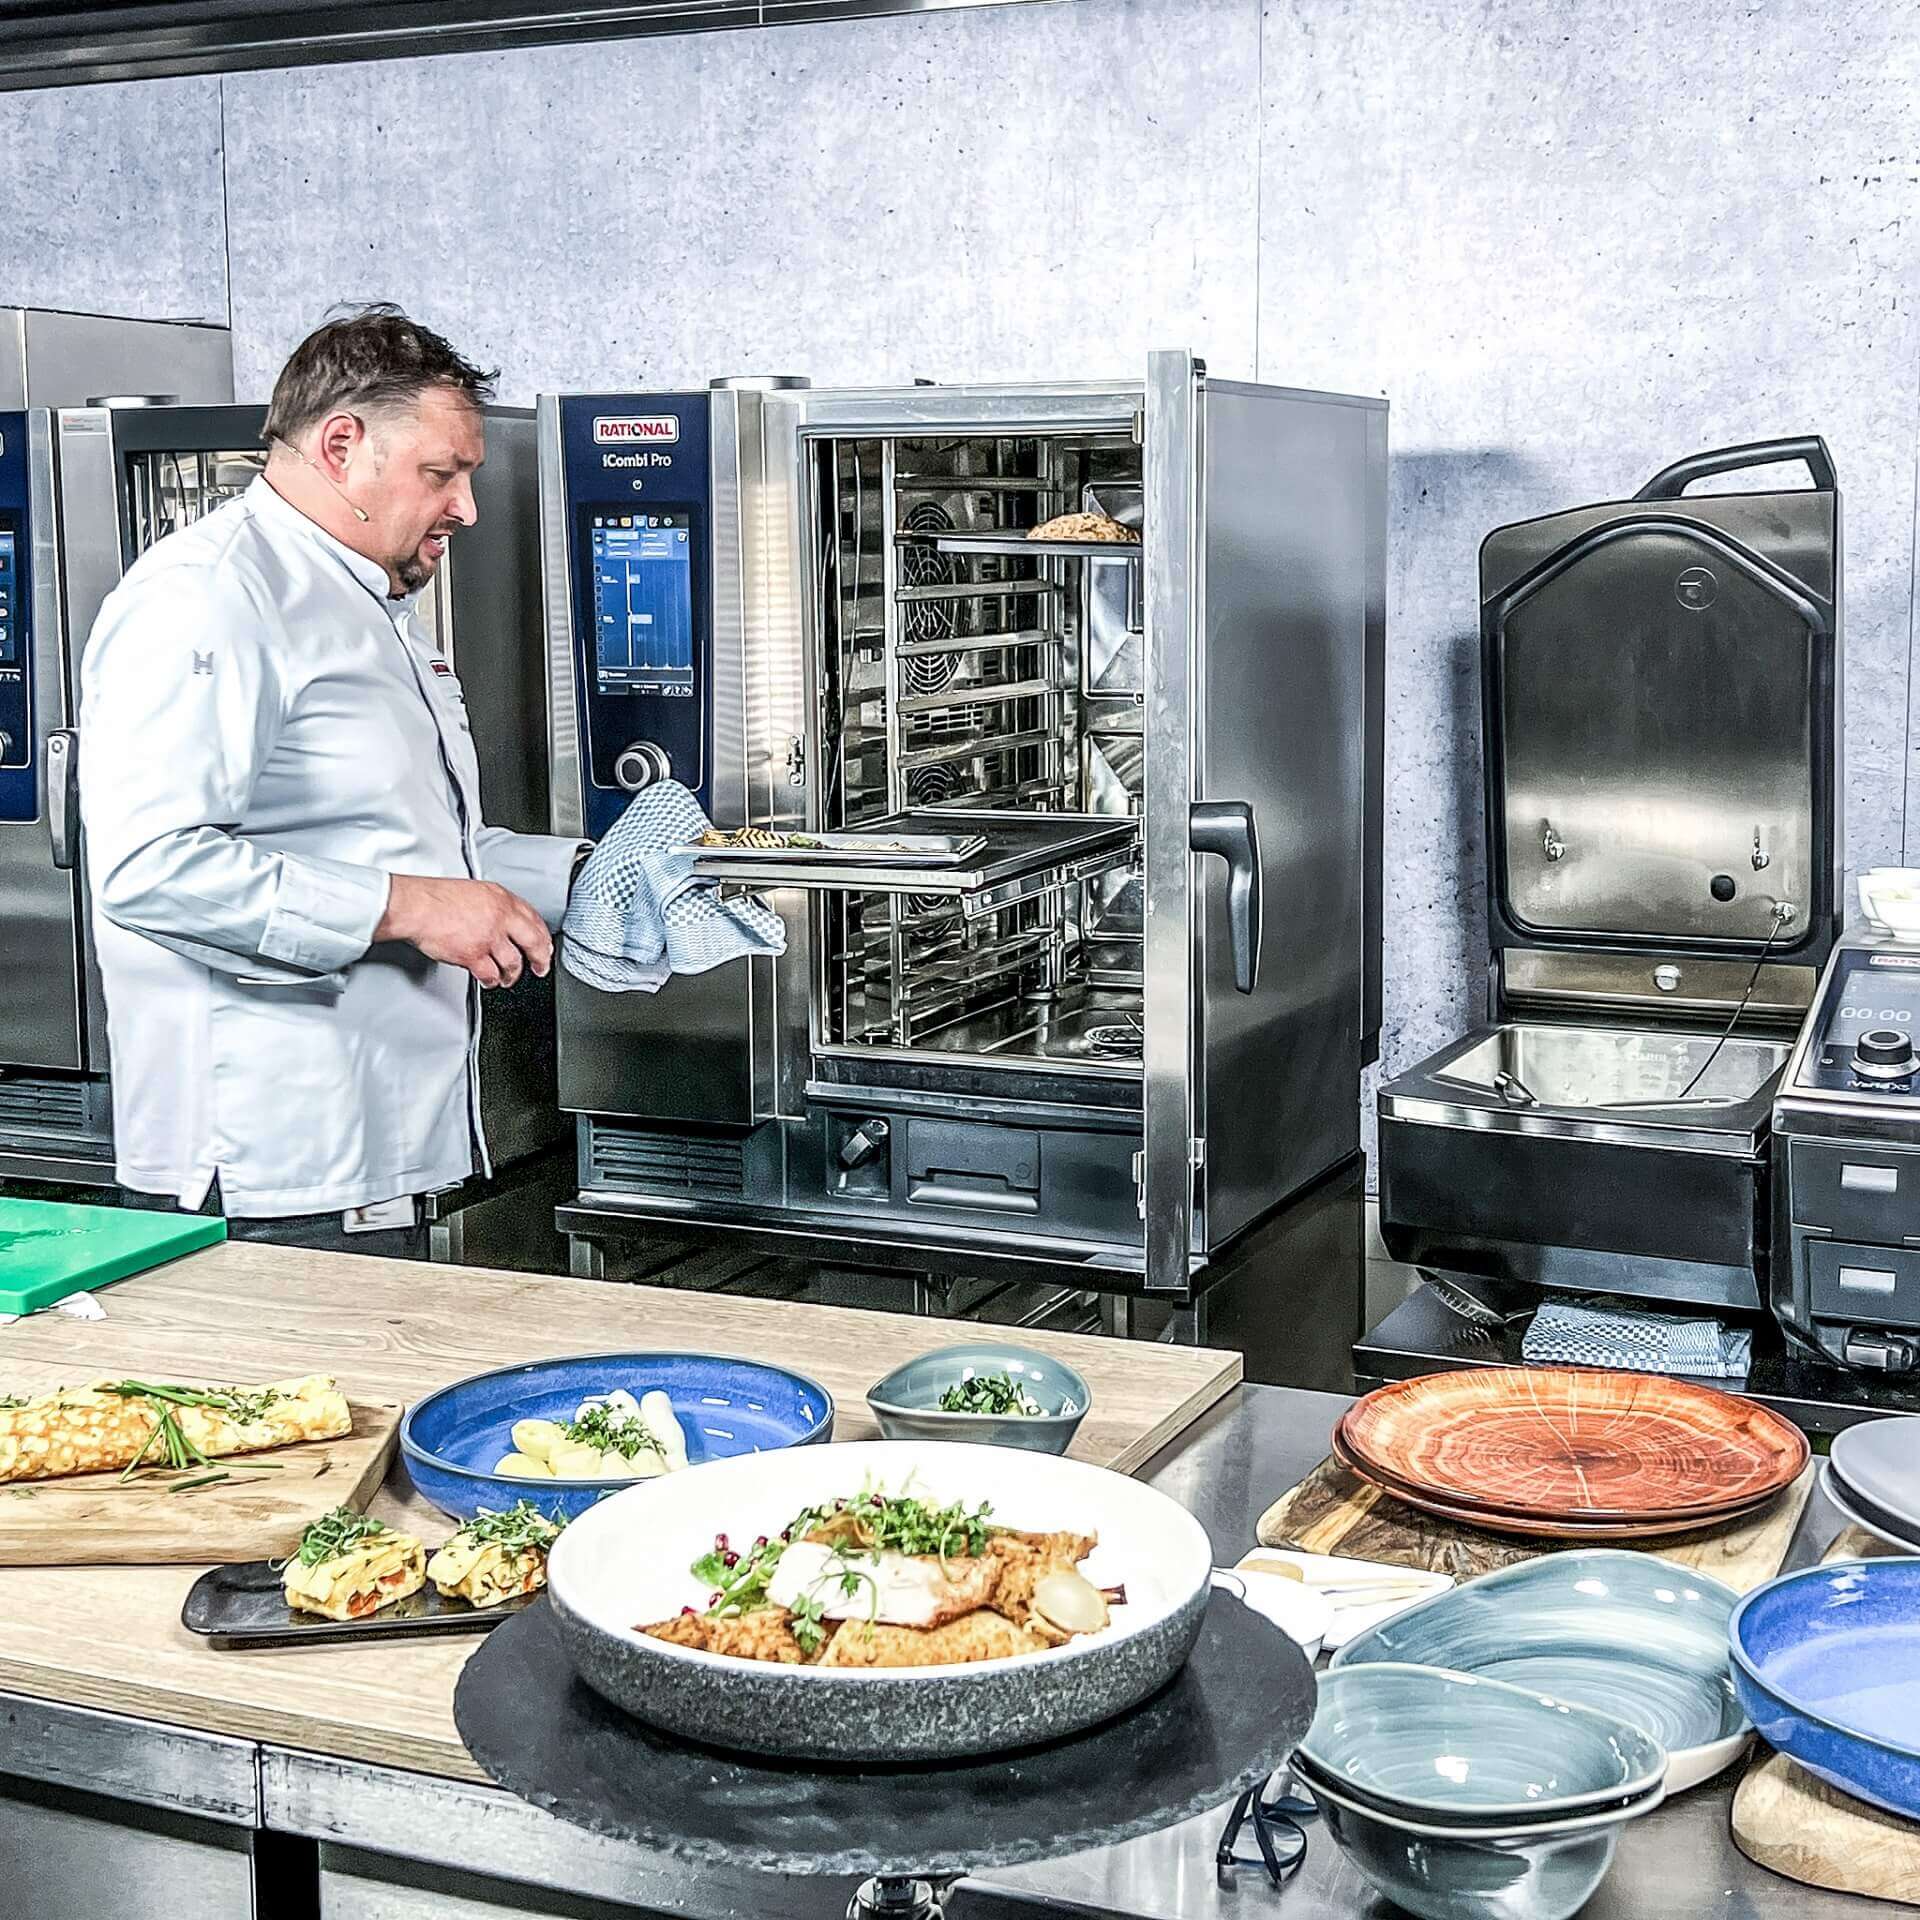 Chef unloads intelligent kitchen equipment - part of great hospitality management